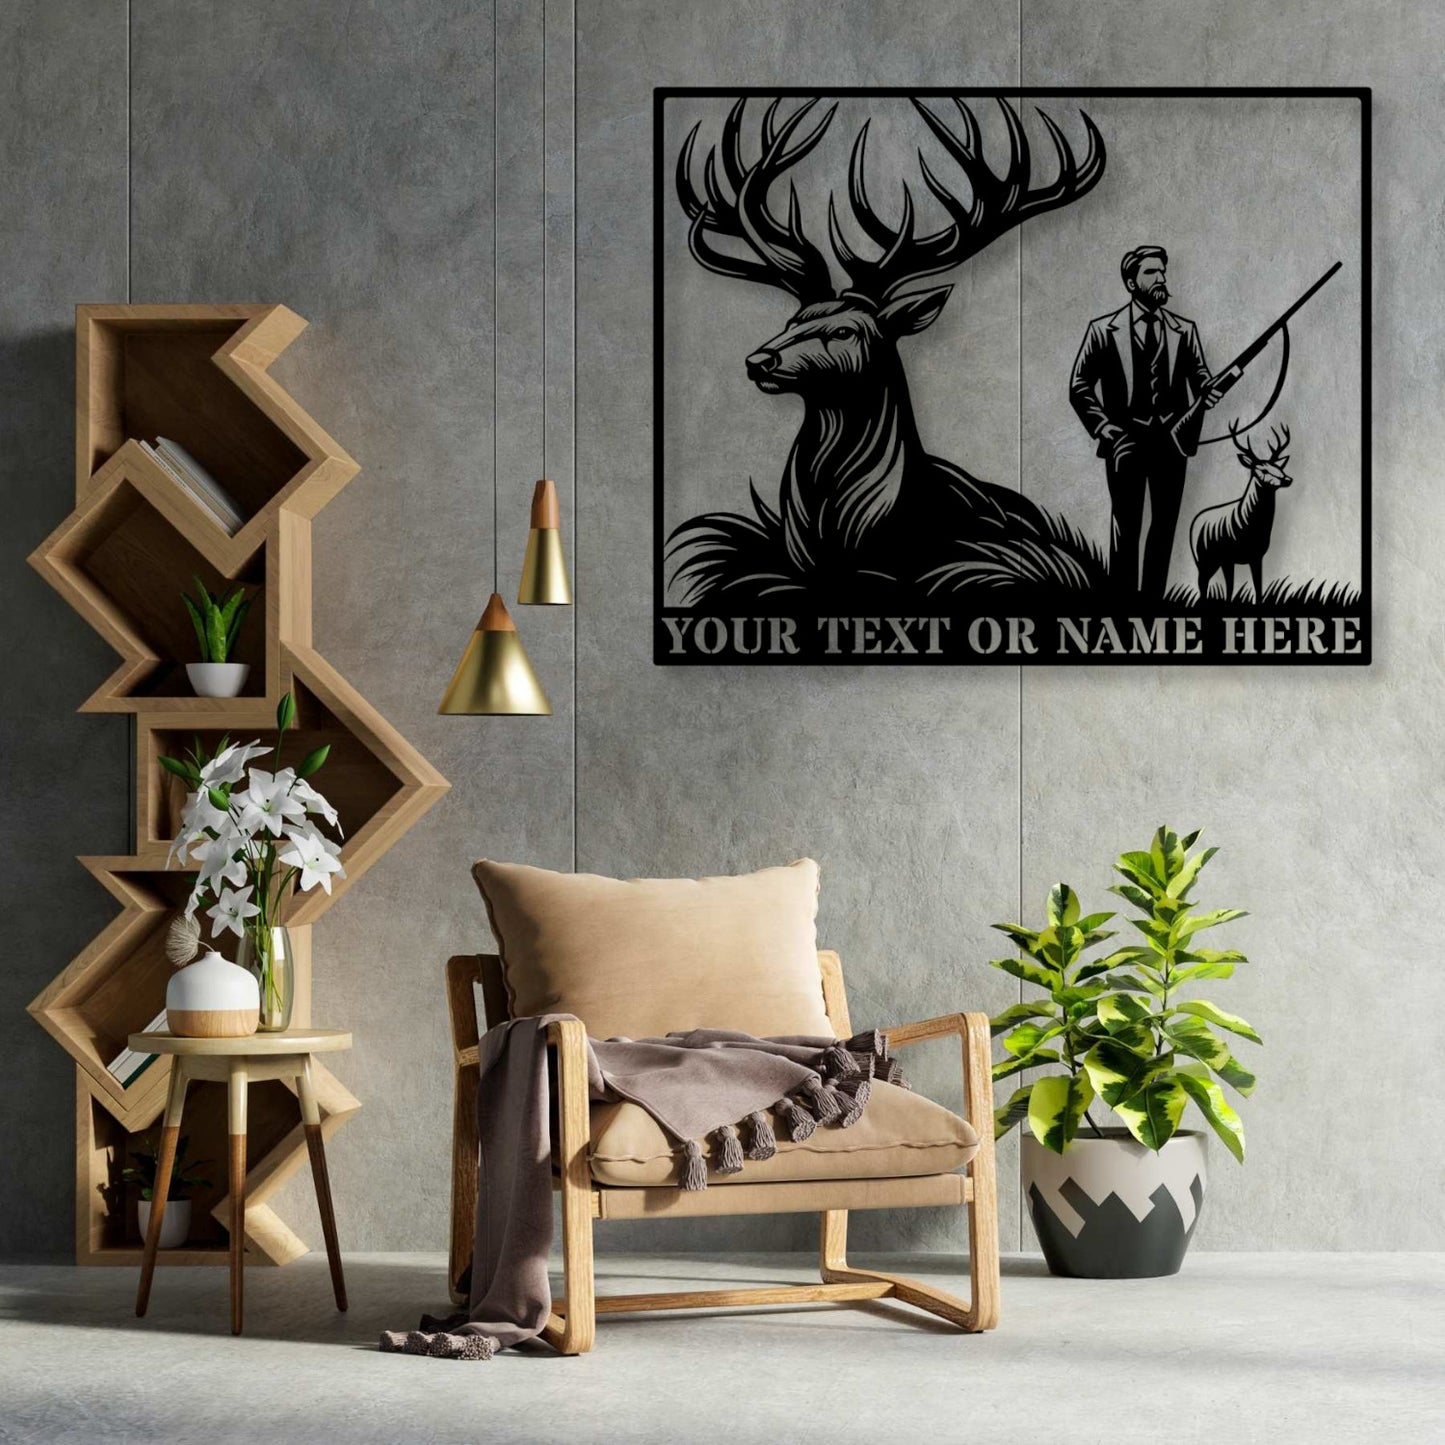 Personalized Hunting Cabin Name Metal Sign. Custom Deer Hunter Wall Decor Gift. Huntsman Wall Hanging. Hunting Lodge Decoration Gift. Personal Cabin Decor Gift